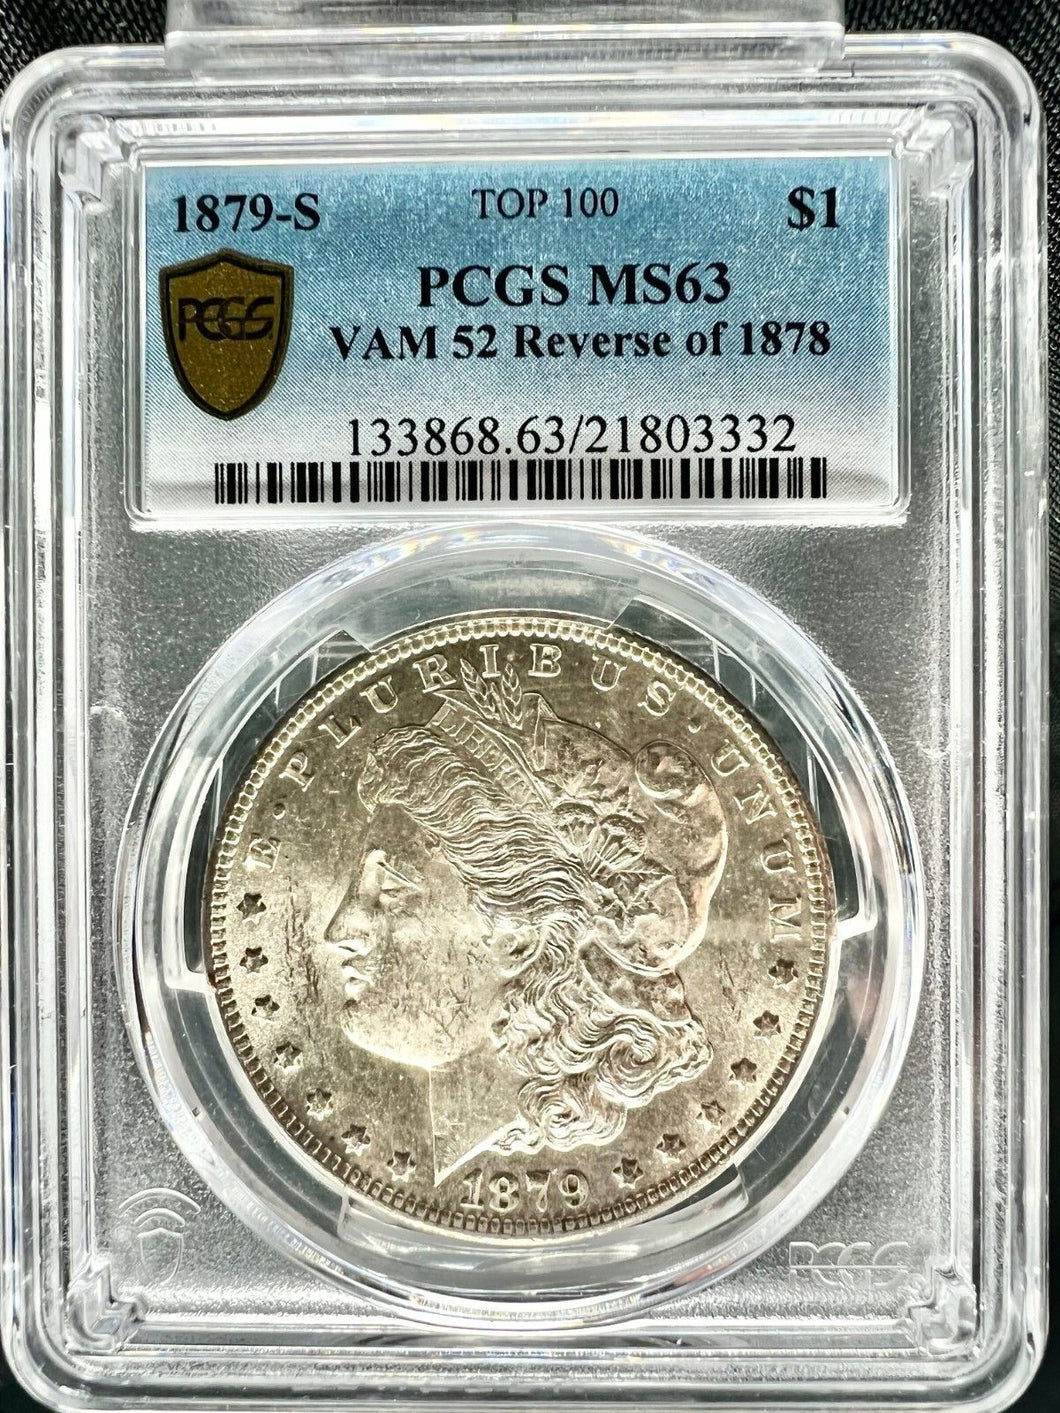 1879-S Reverse 1878 $1 Morgan Silver Dollar PCGS MS63 - Frosty Blast White Coin